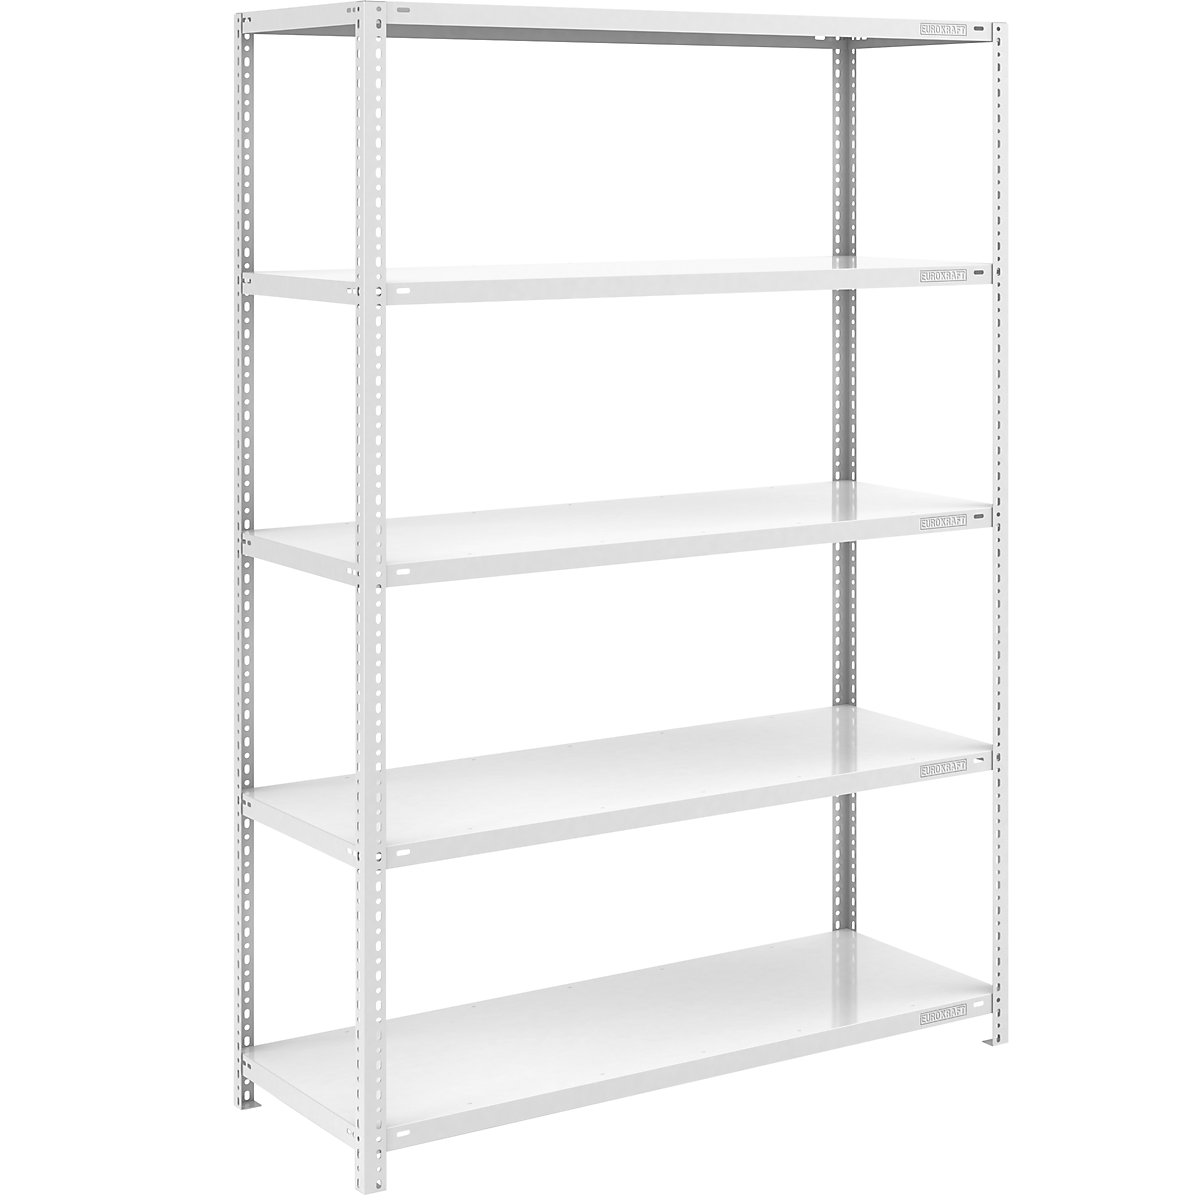 Bolt-together shelf unit, light duty, plastic coated – eurokraft pro, shelf unit height 2000 mm, shelf width 1300 mm, depth 600 mm, standard shelf unit-12